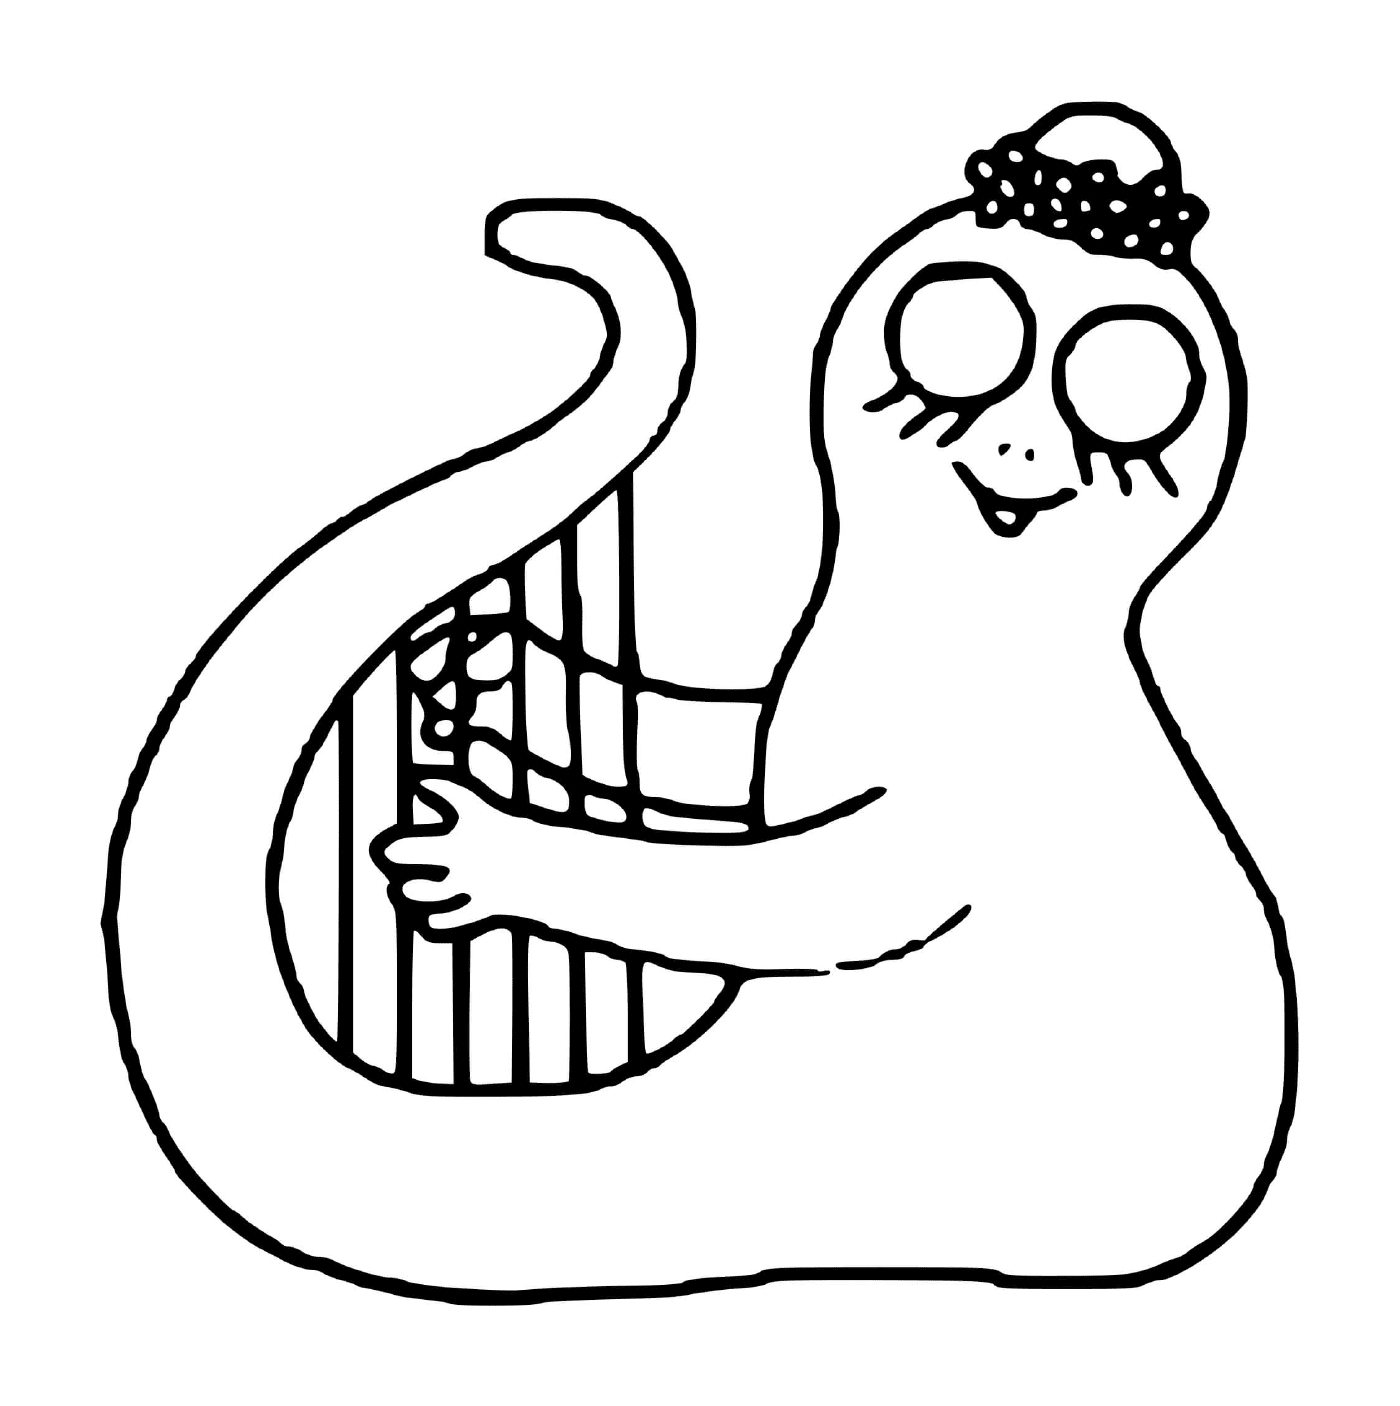  fantasma segurando uma harpa 